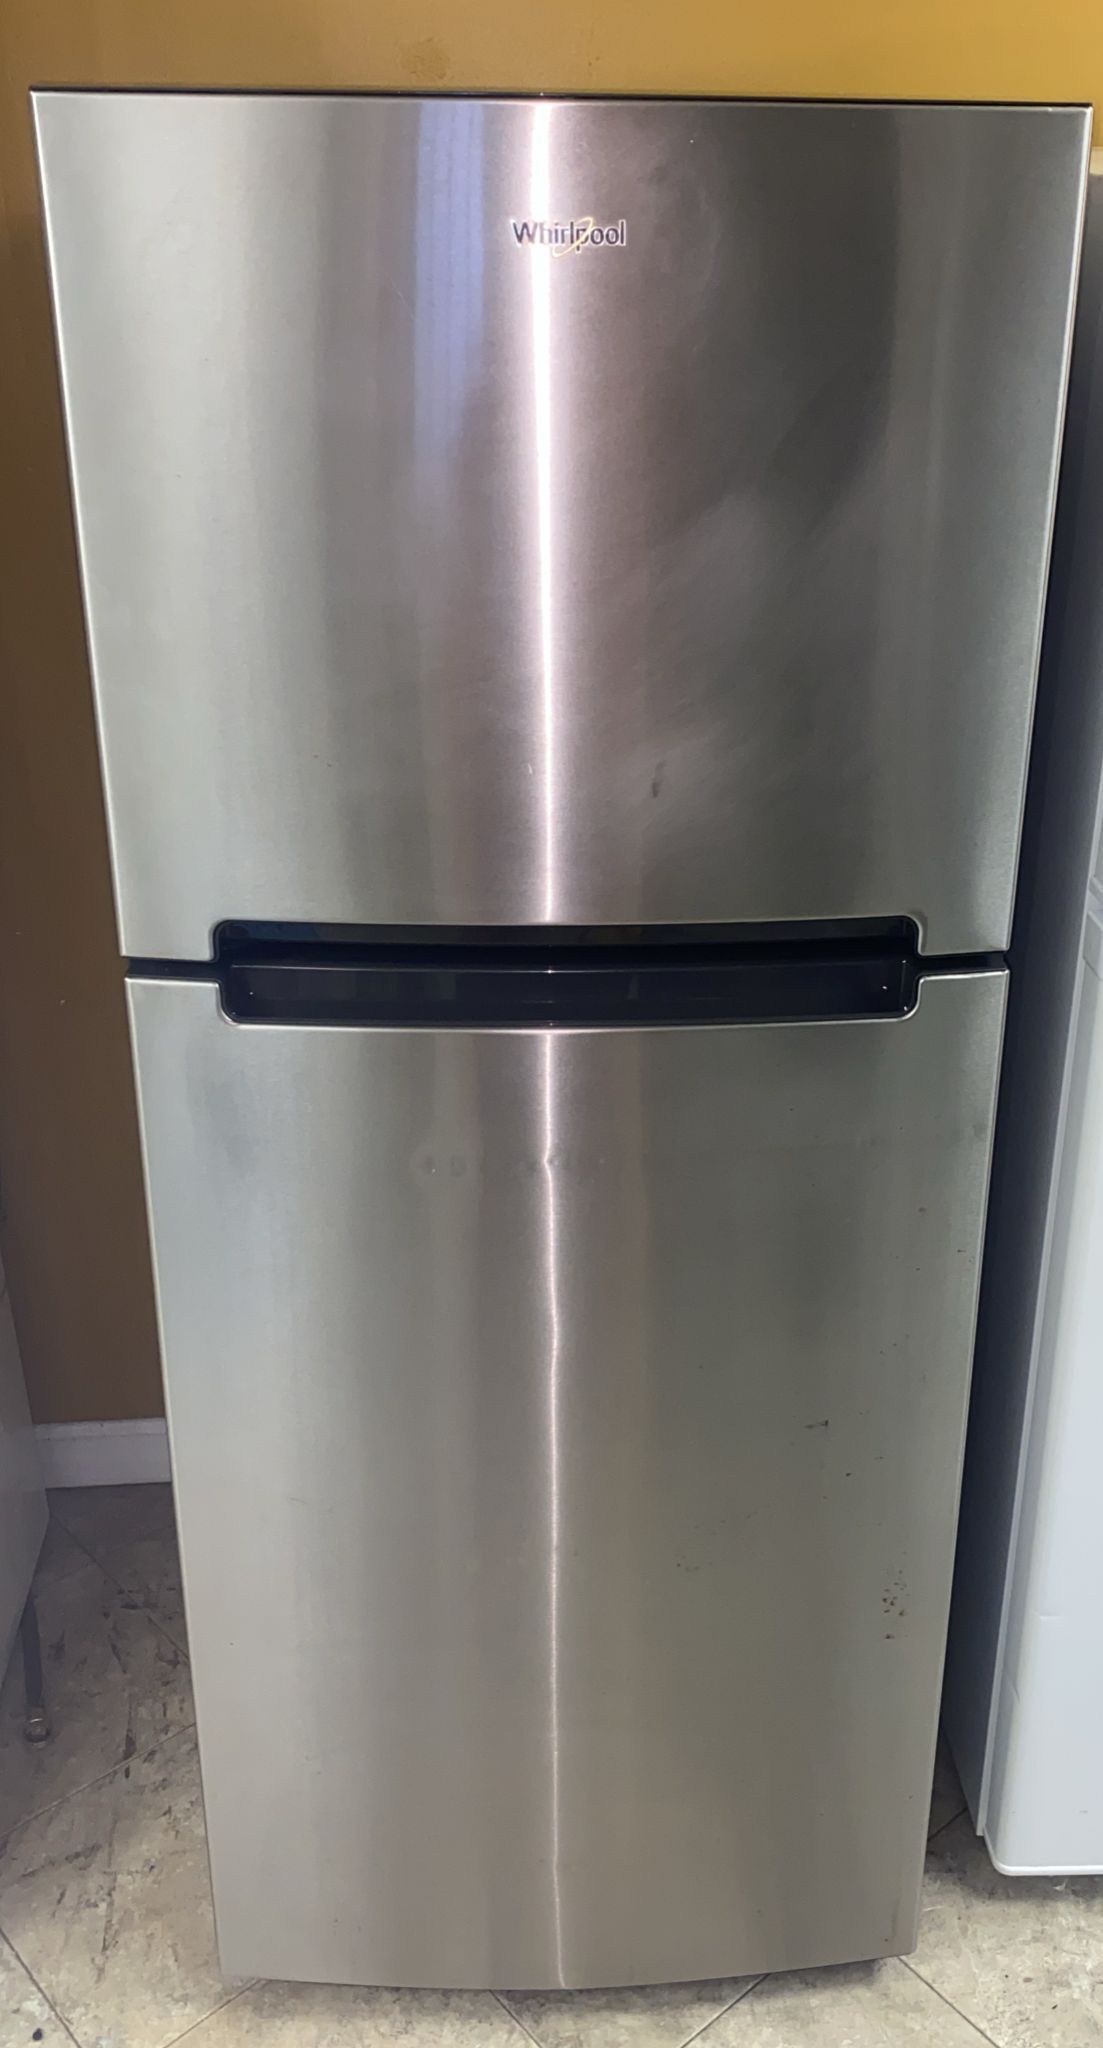 Whirlpool Refrigerator $295.00 USD* · Marca: Whirlpool 18' Whirlpool Stainless Steel refrigerator, like new. Asking $295 firm. 